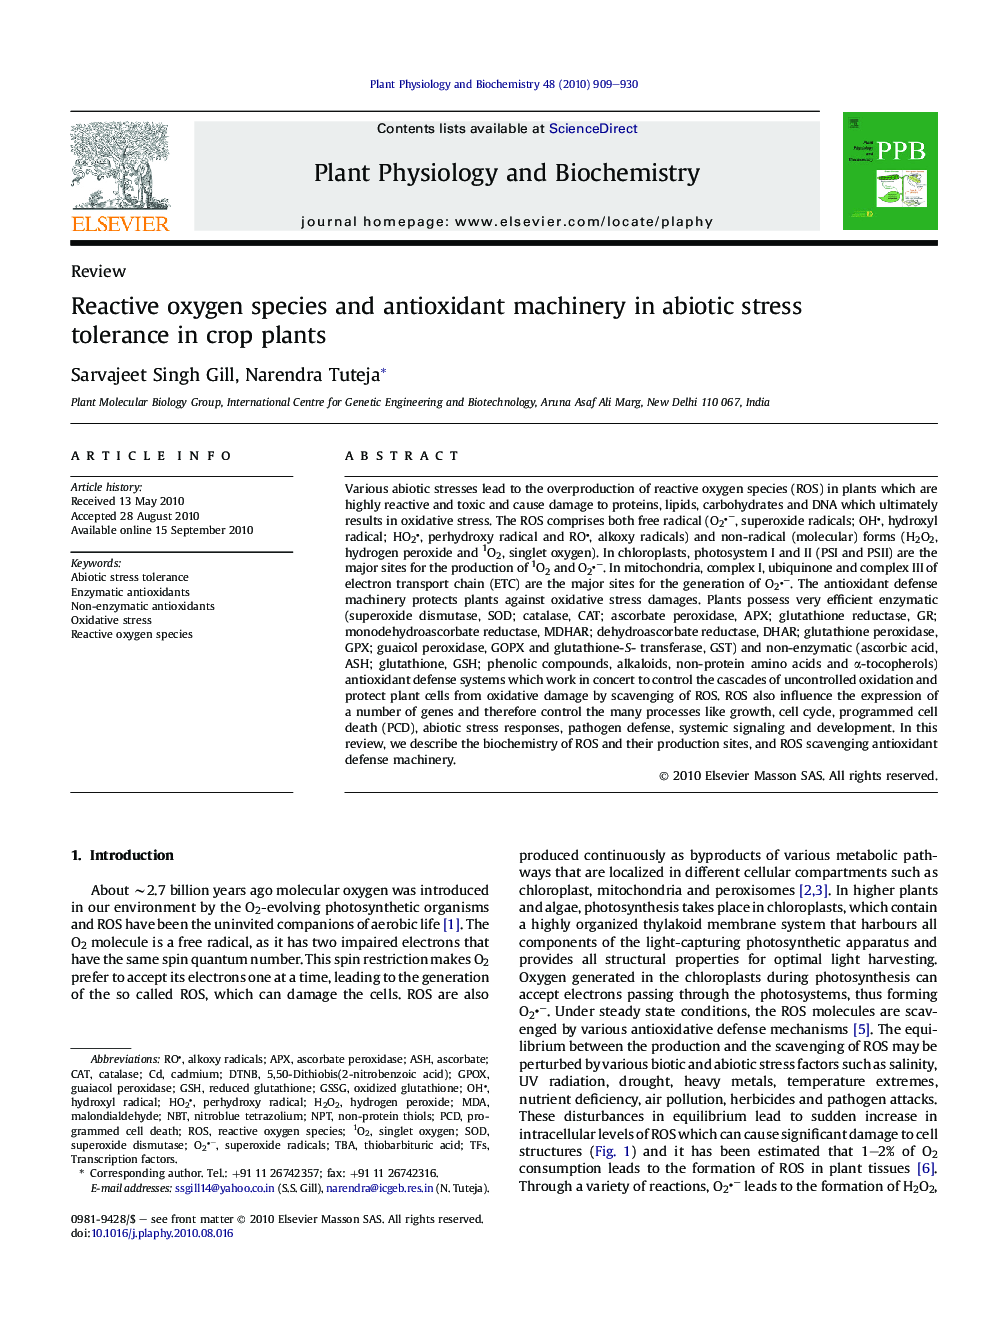 Reactive oxygen species and antioxidant machinery in abiotic stress tolerance in crop plants